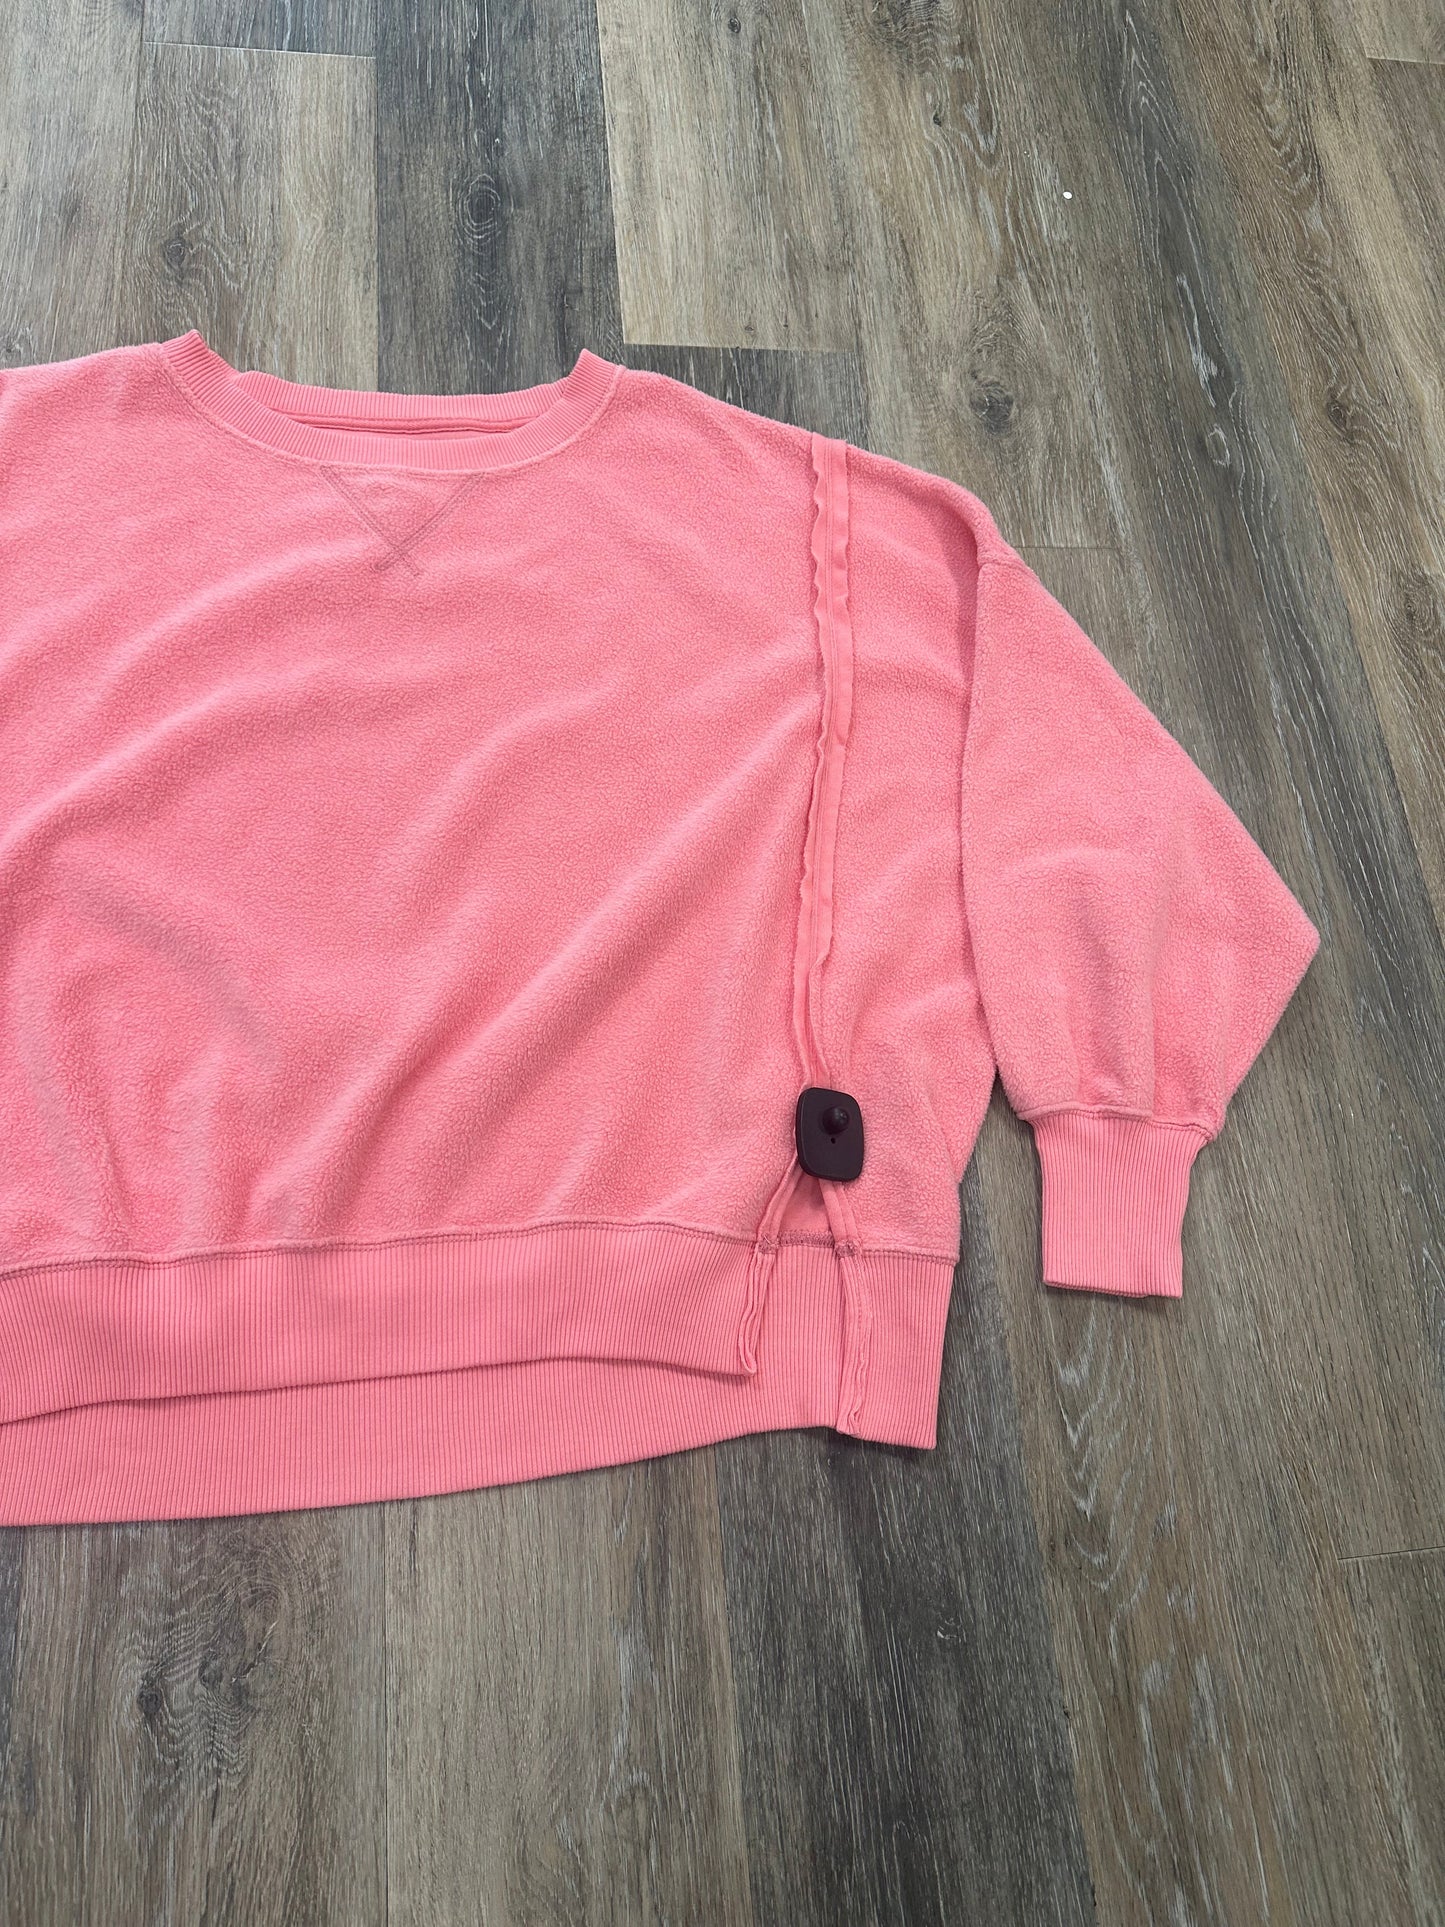 Pink Athletic Sweatshirt Crewneck American Eagle, Size Xs